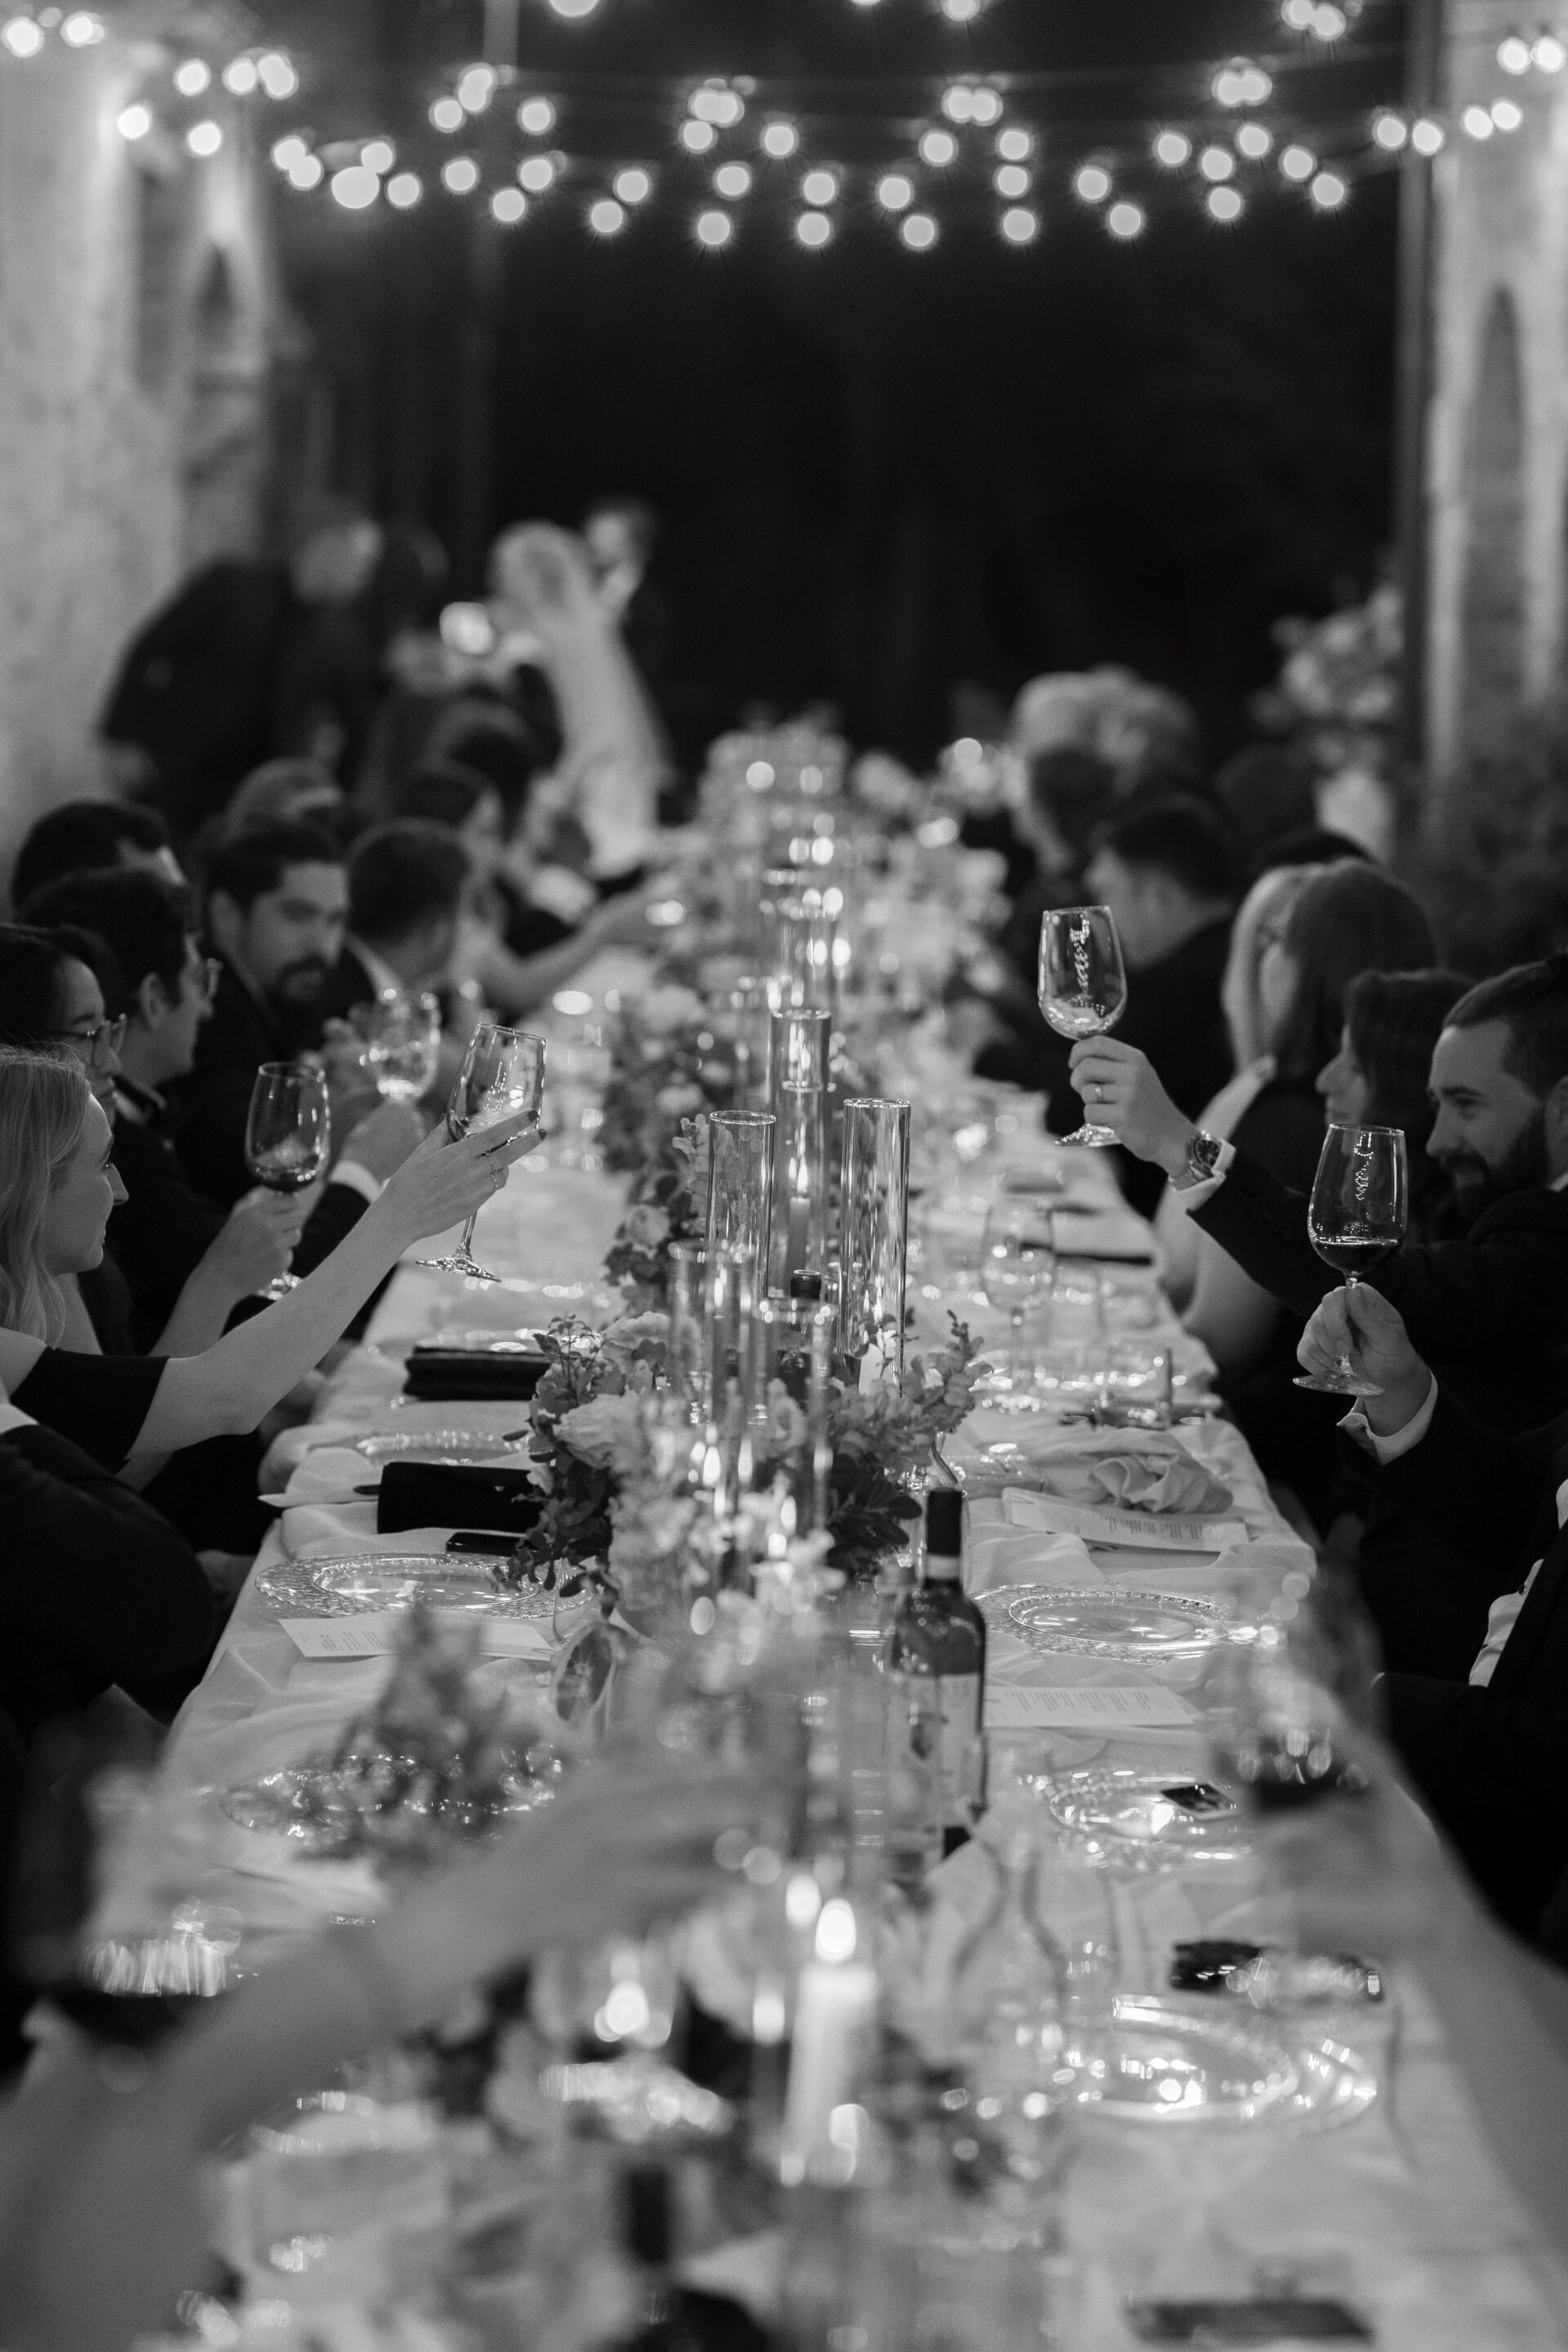 Guests enjoy an Italian wedding feast at luxury Tuscan wedding